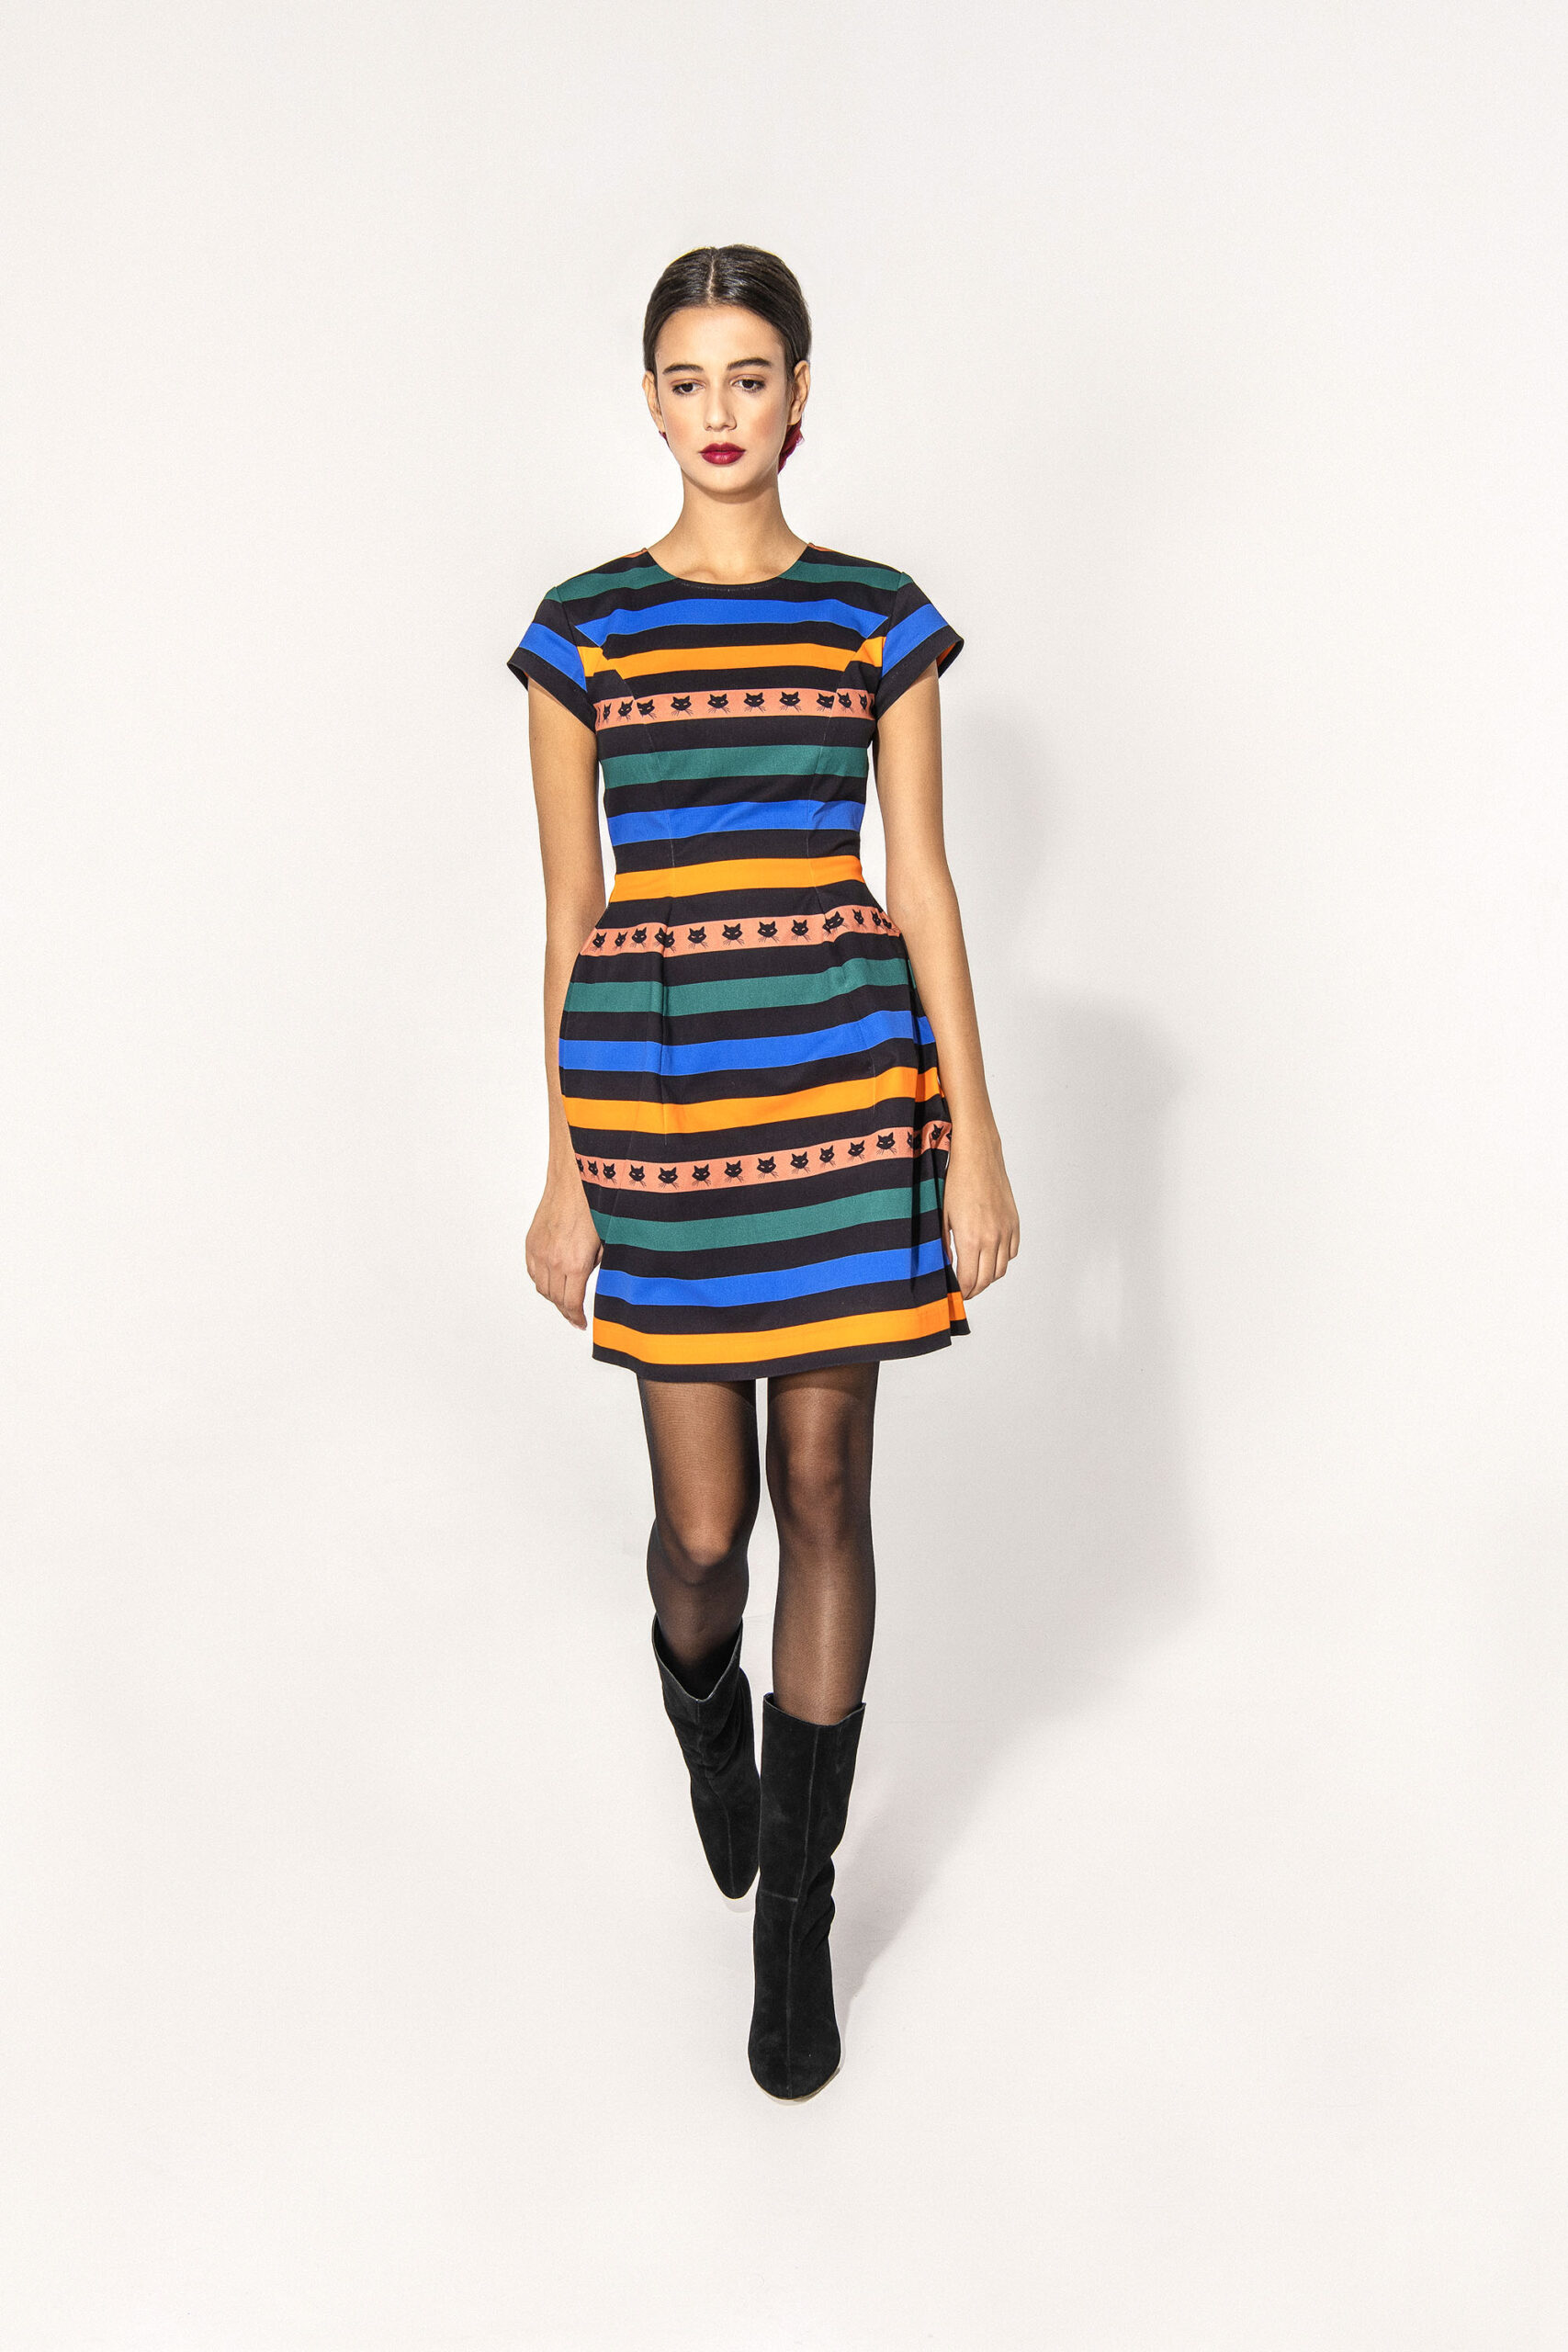 Colored stripes dress walking scaled • Sassa Björg